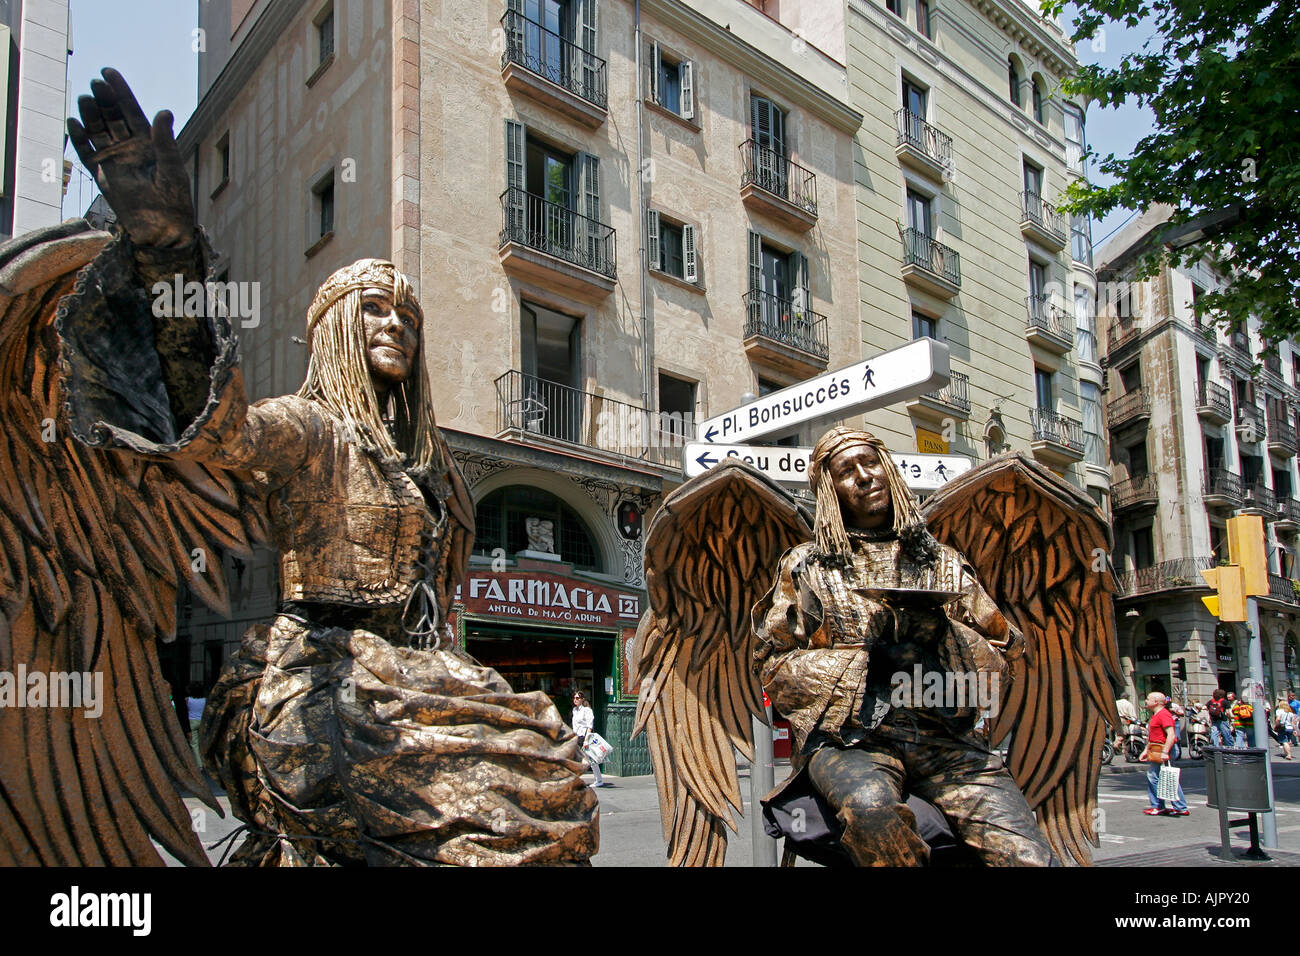 spain Barcelona ramblas street artists angel costums Stock Photo